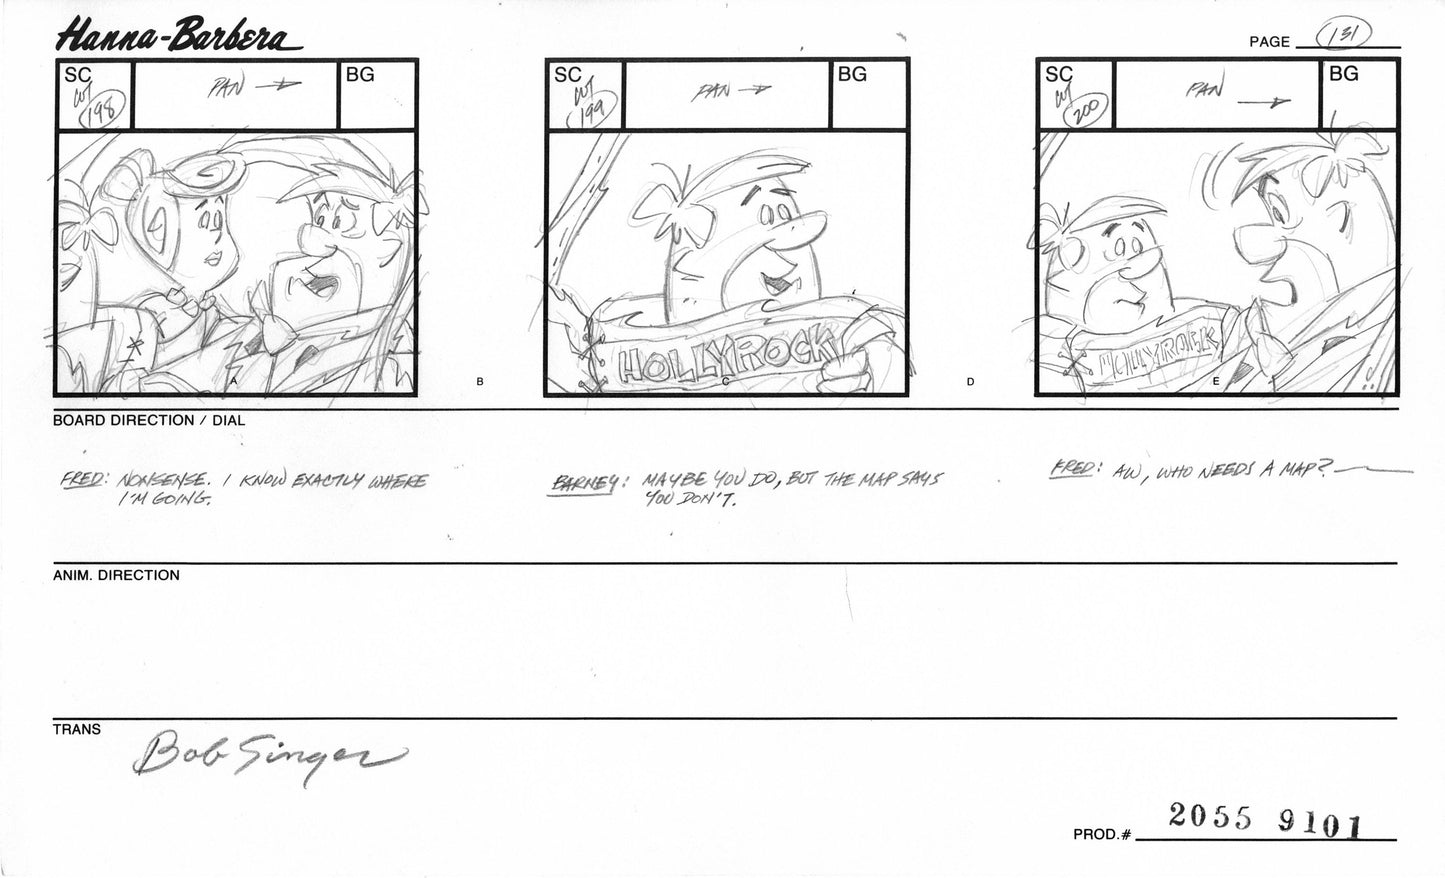 Flintstones Hollyrock-a-Bye Baby Animation Storyboard from Hanna Barbera Signed by Bob Singer 1993 131